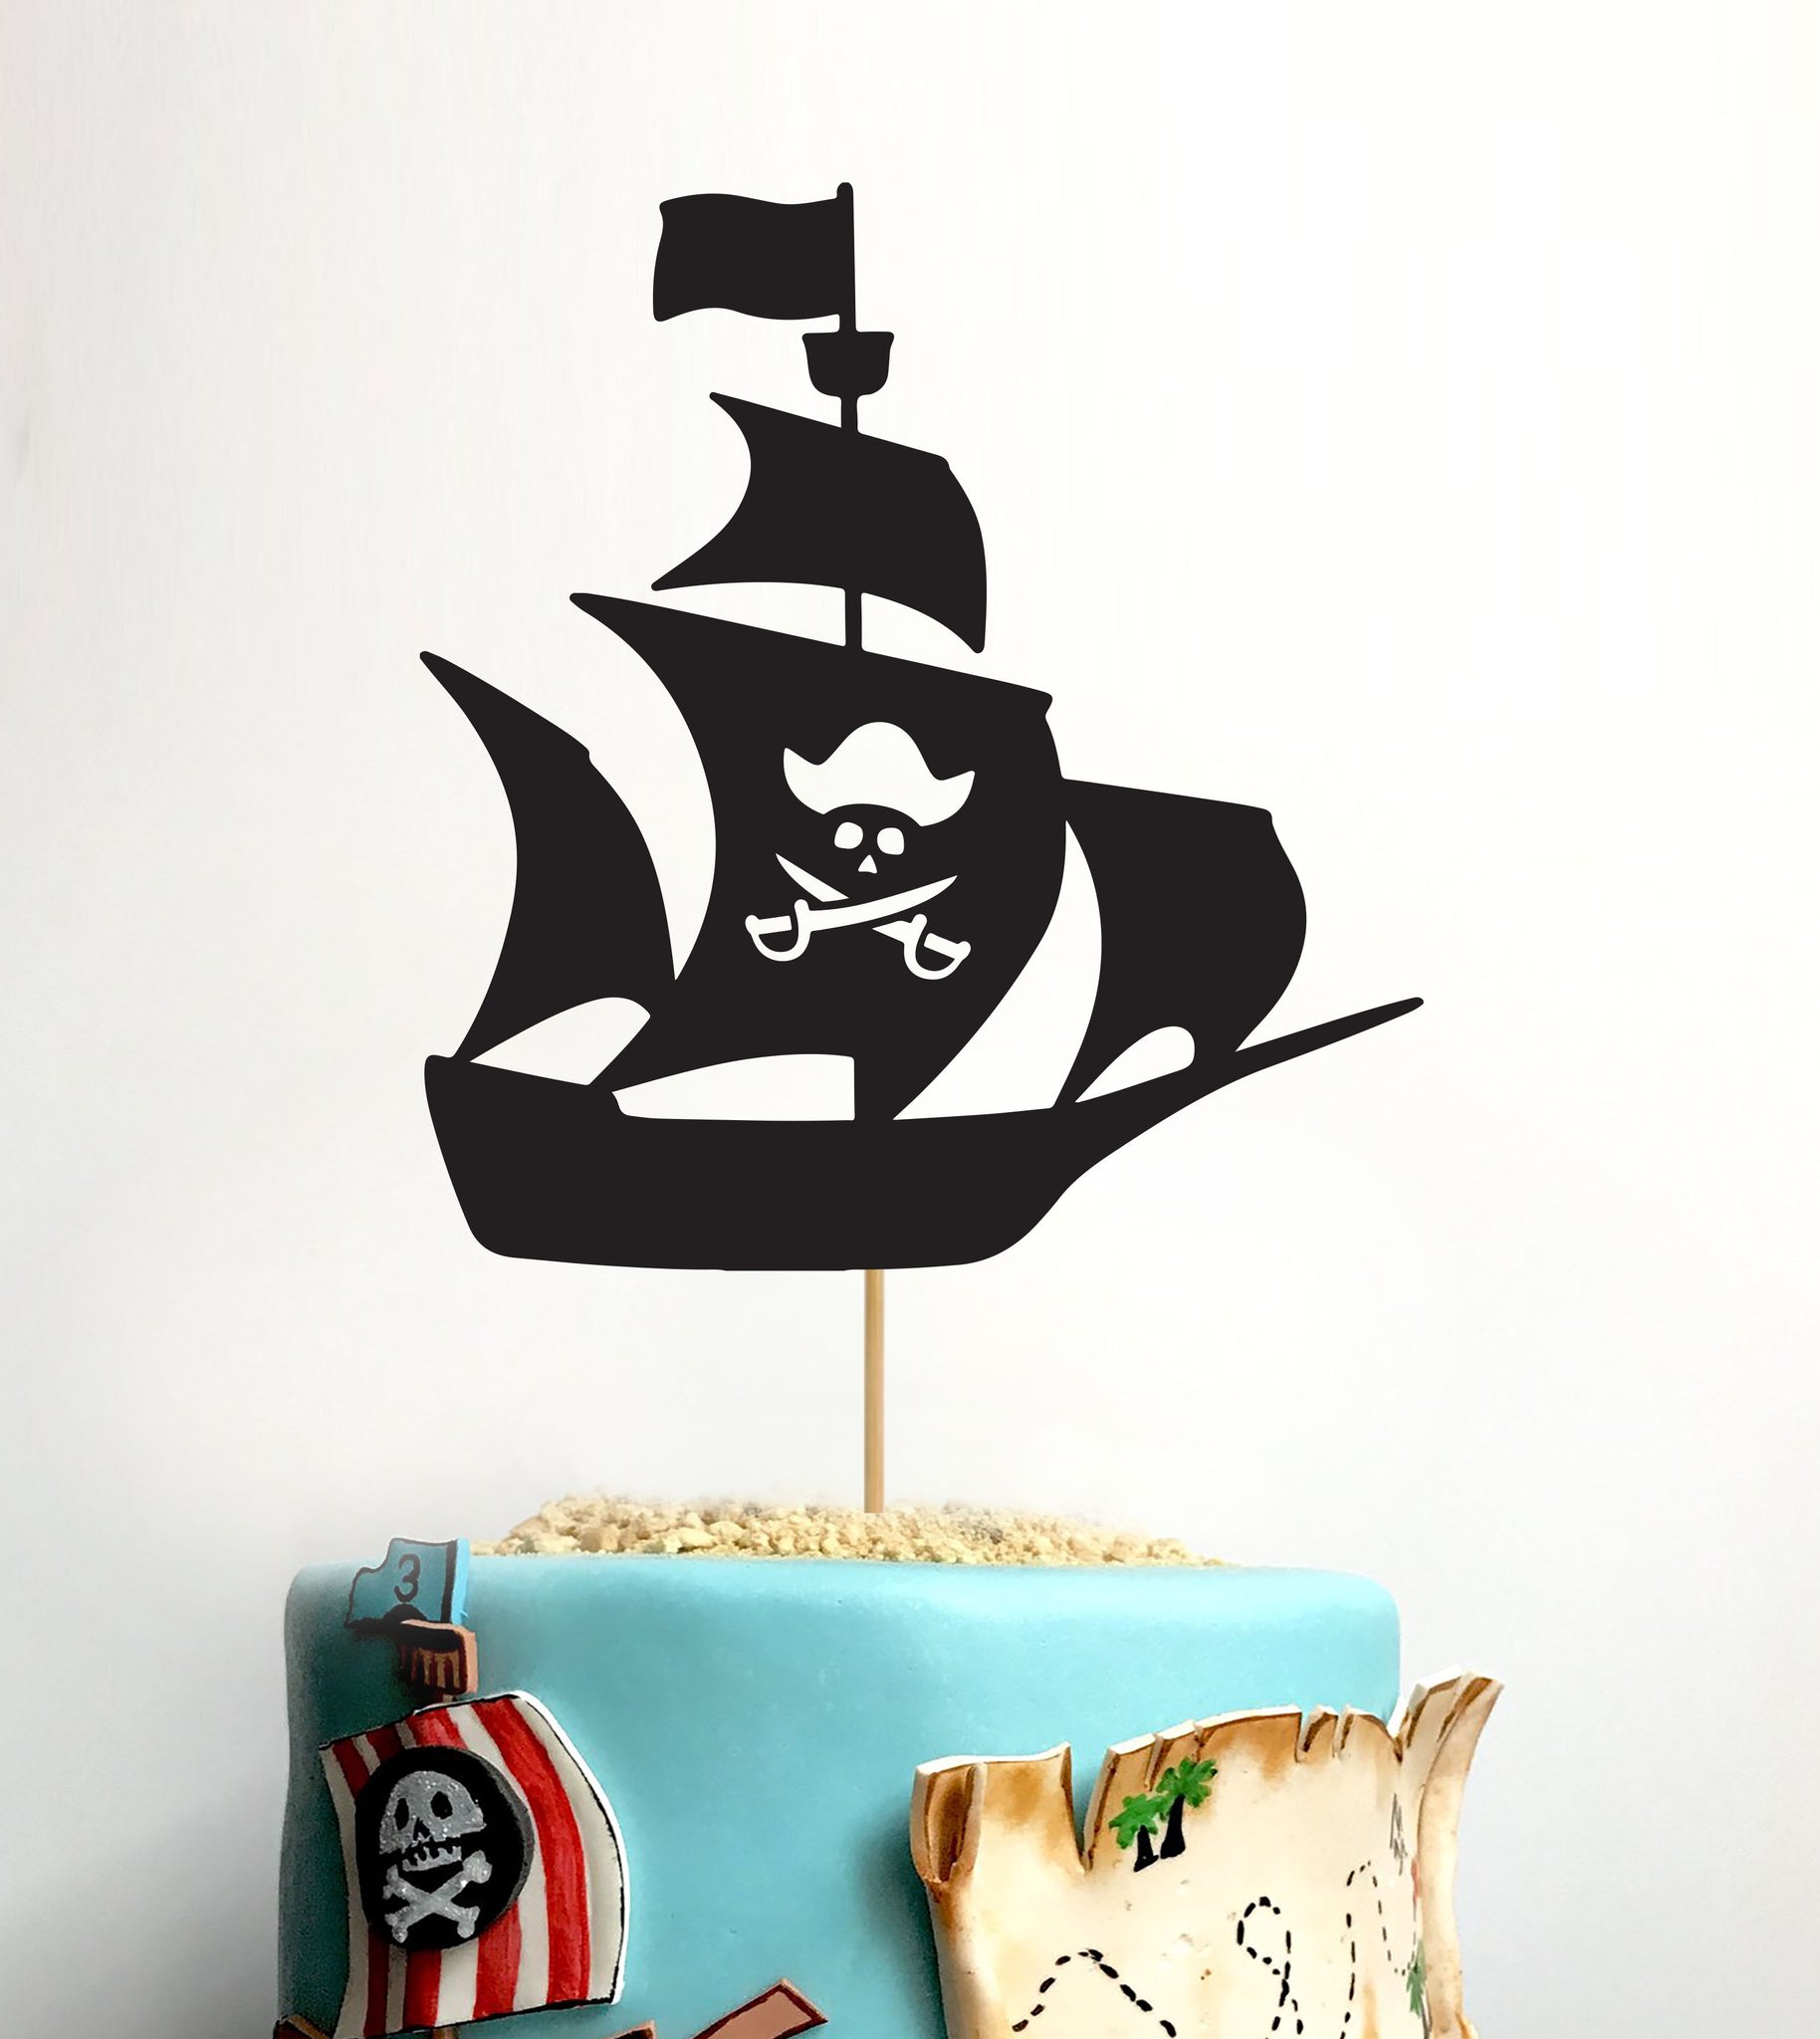 Pirate ship and treasure island cake recipe | BBC Good Food